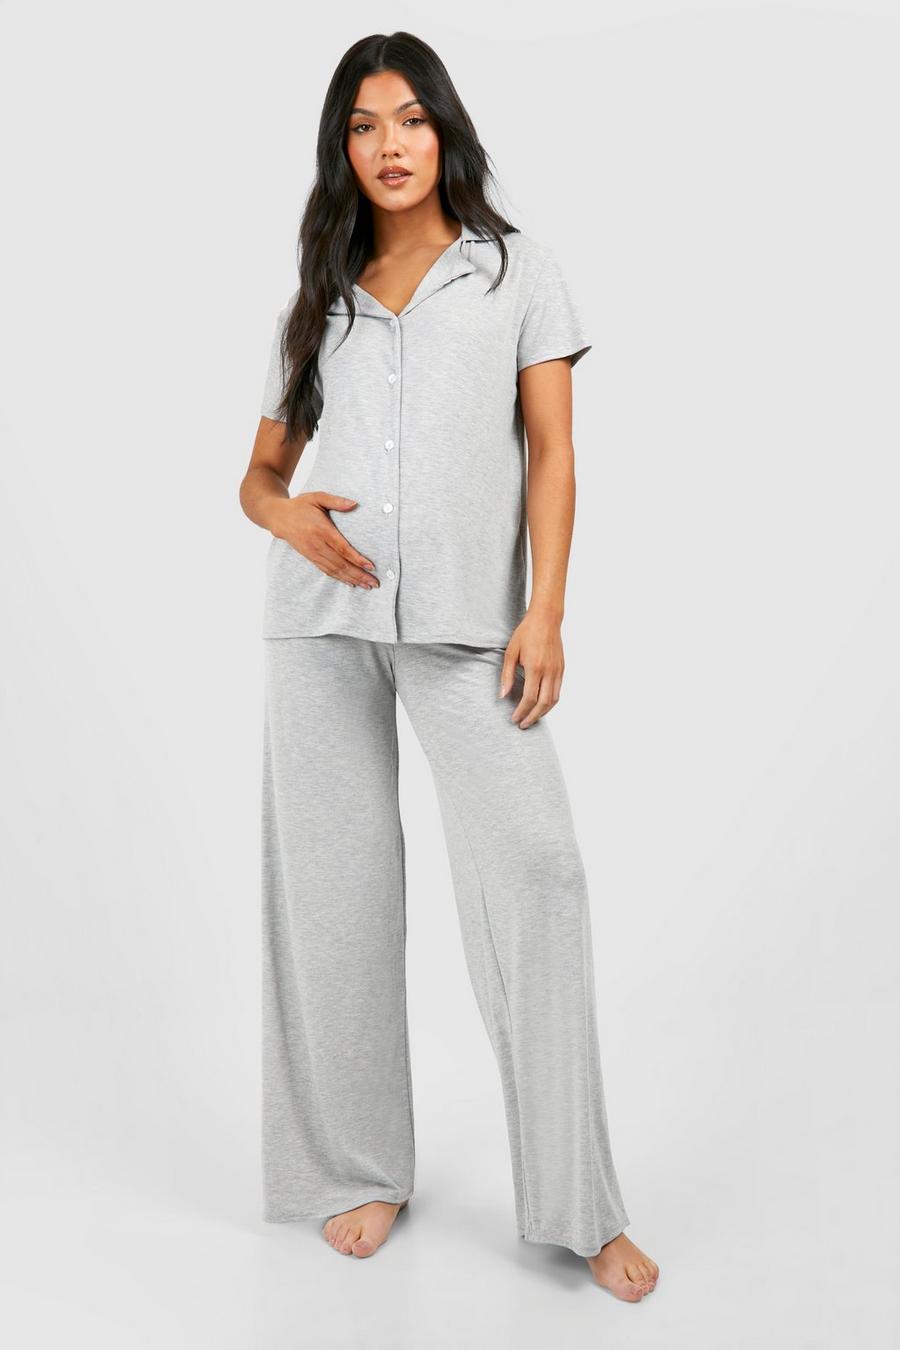 Grey Maternity Short Sleeve Peached Jersey Knit Pants Set